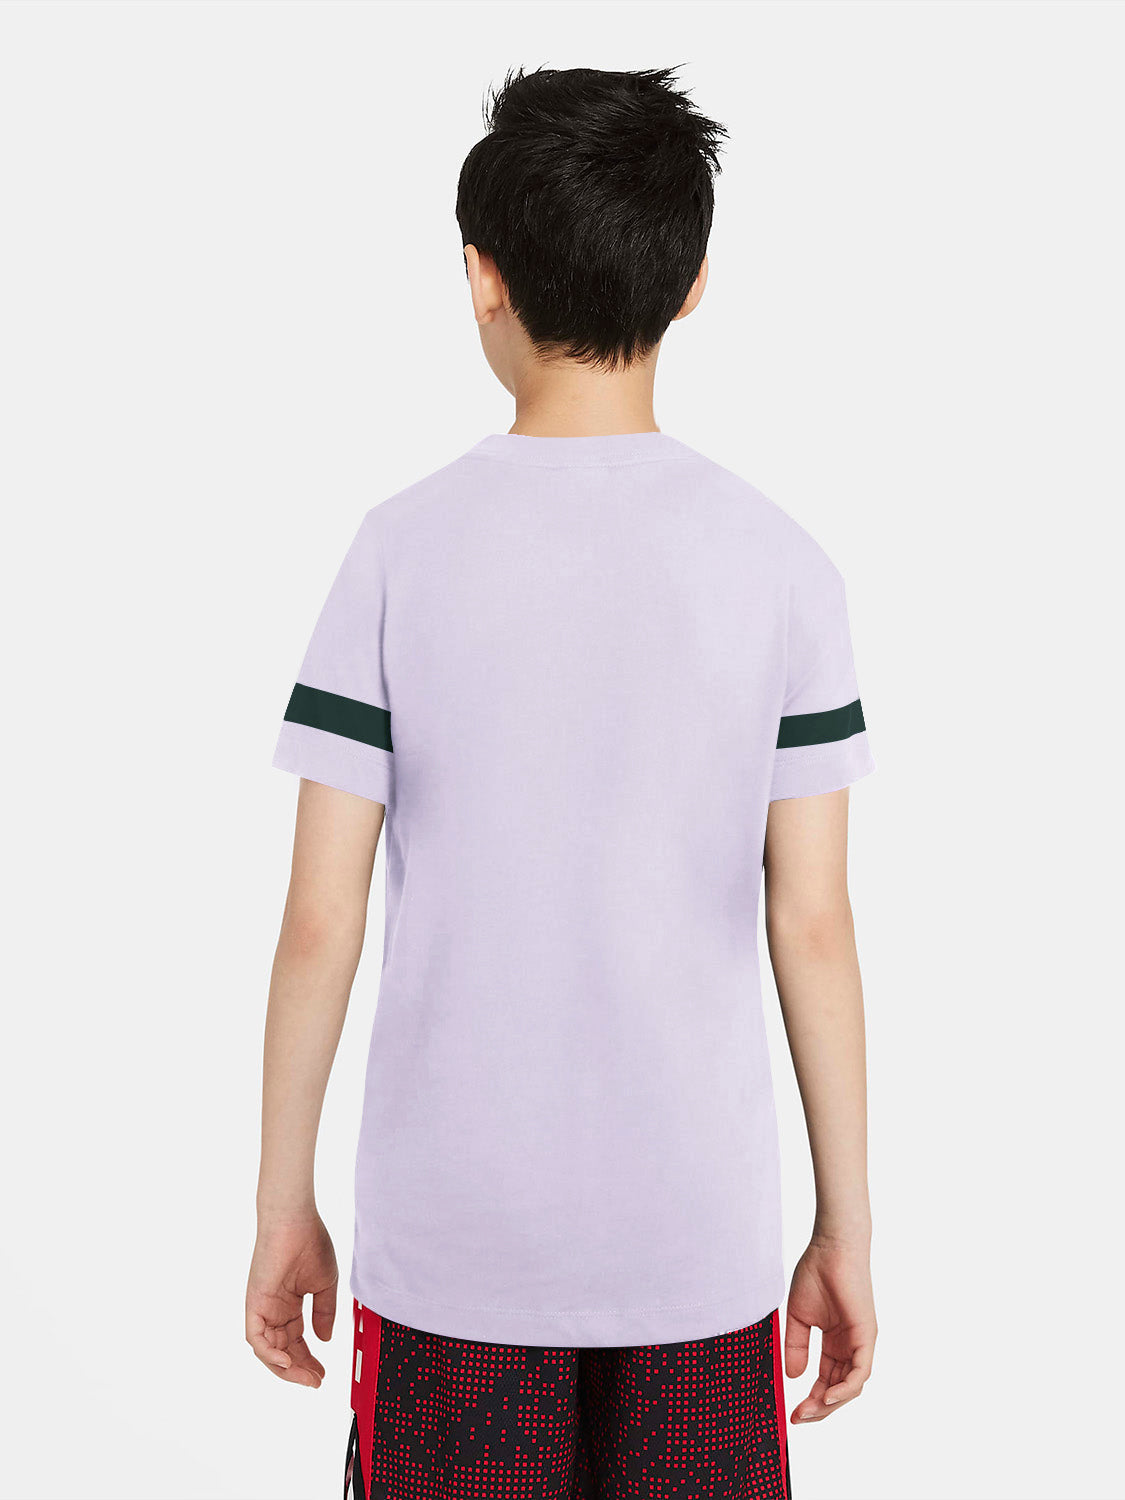 P&B Crew Neck Single Jersey Tee Shirt For Kids-Light Purple & Navy Panel-SP2190